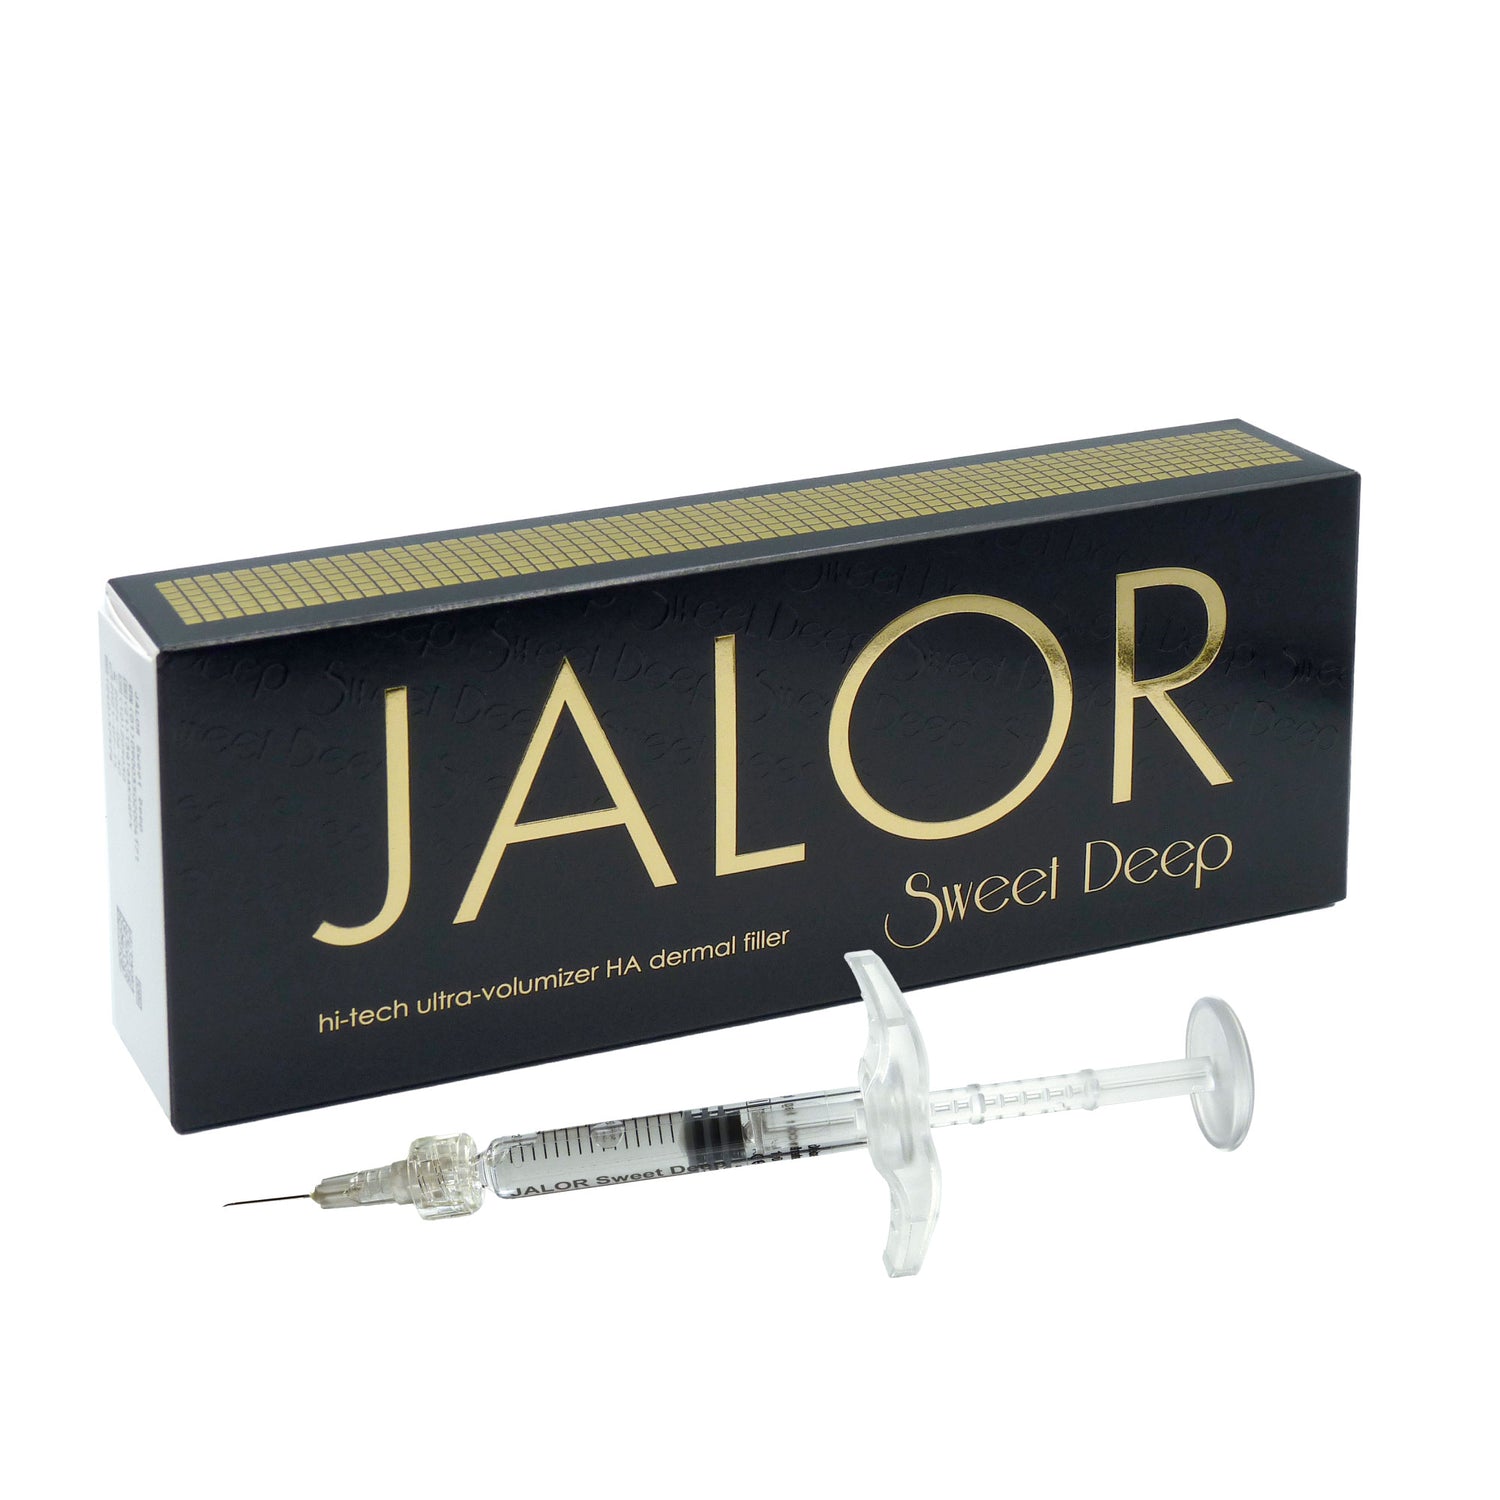 JALOR SWEET DEEP - Filler Dermico Ultra Volumizzante